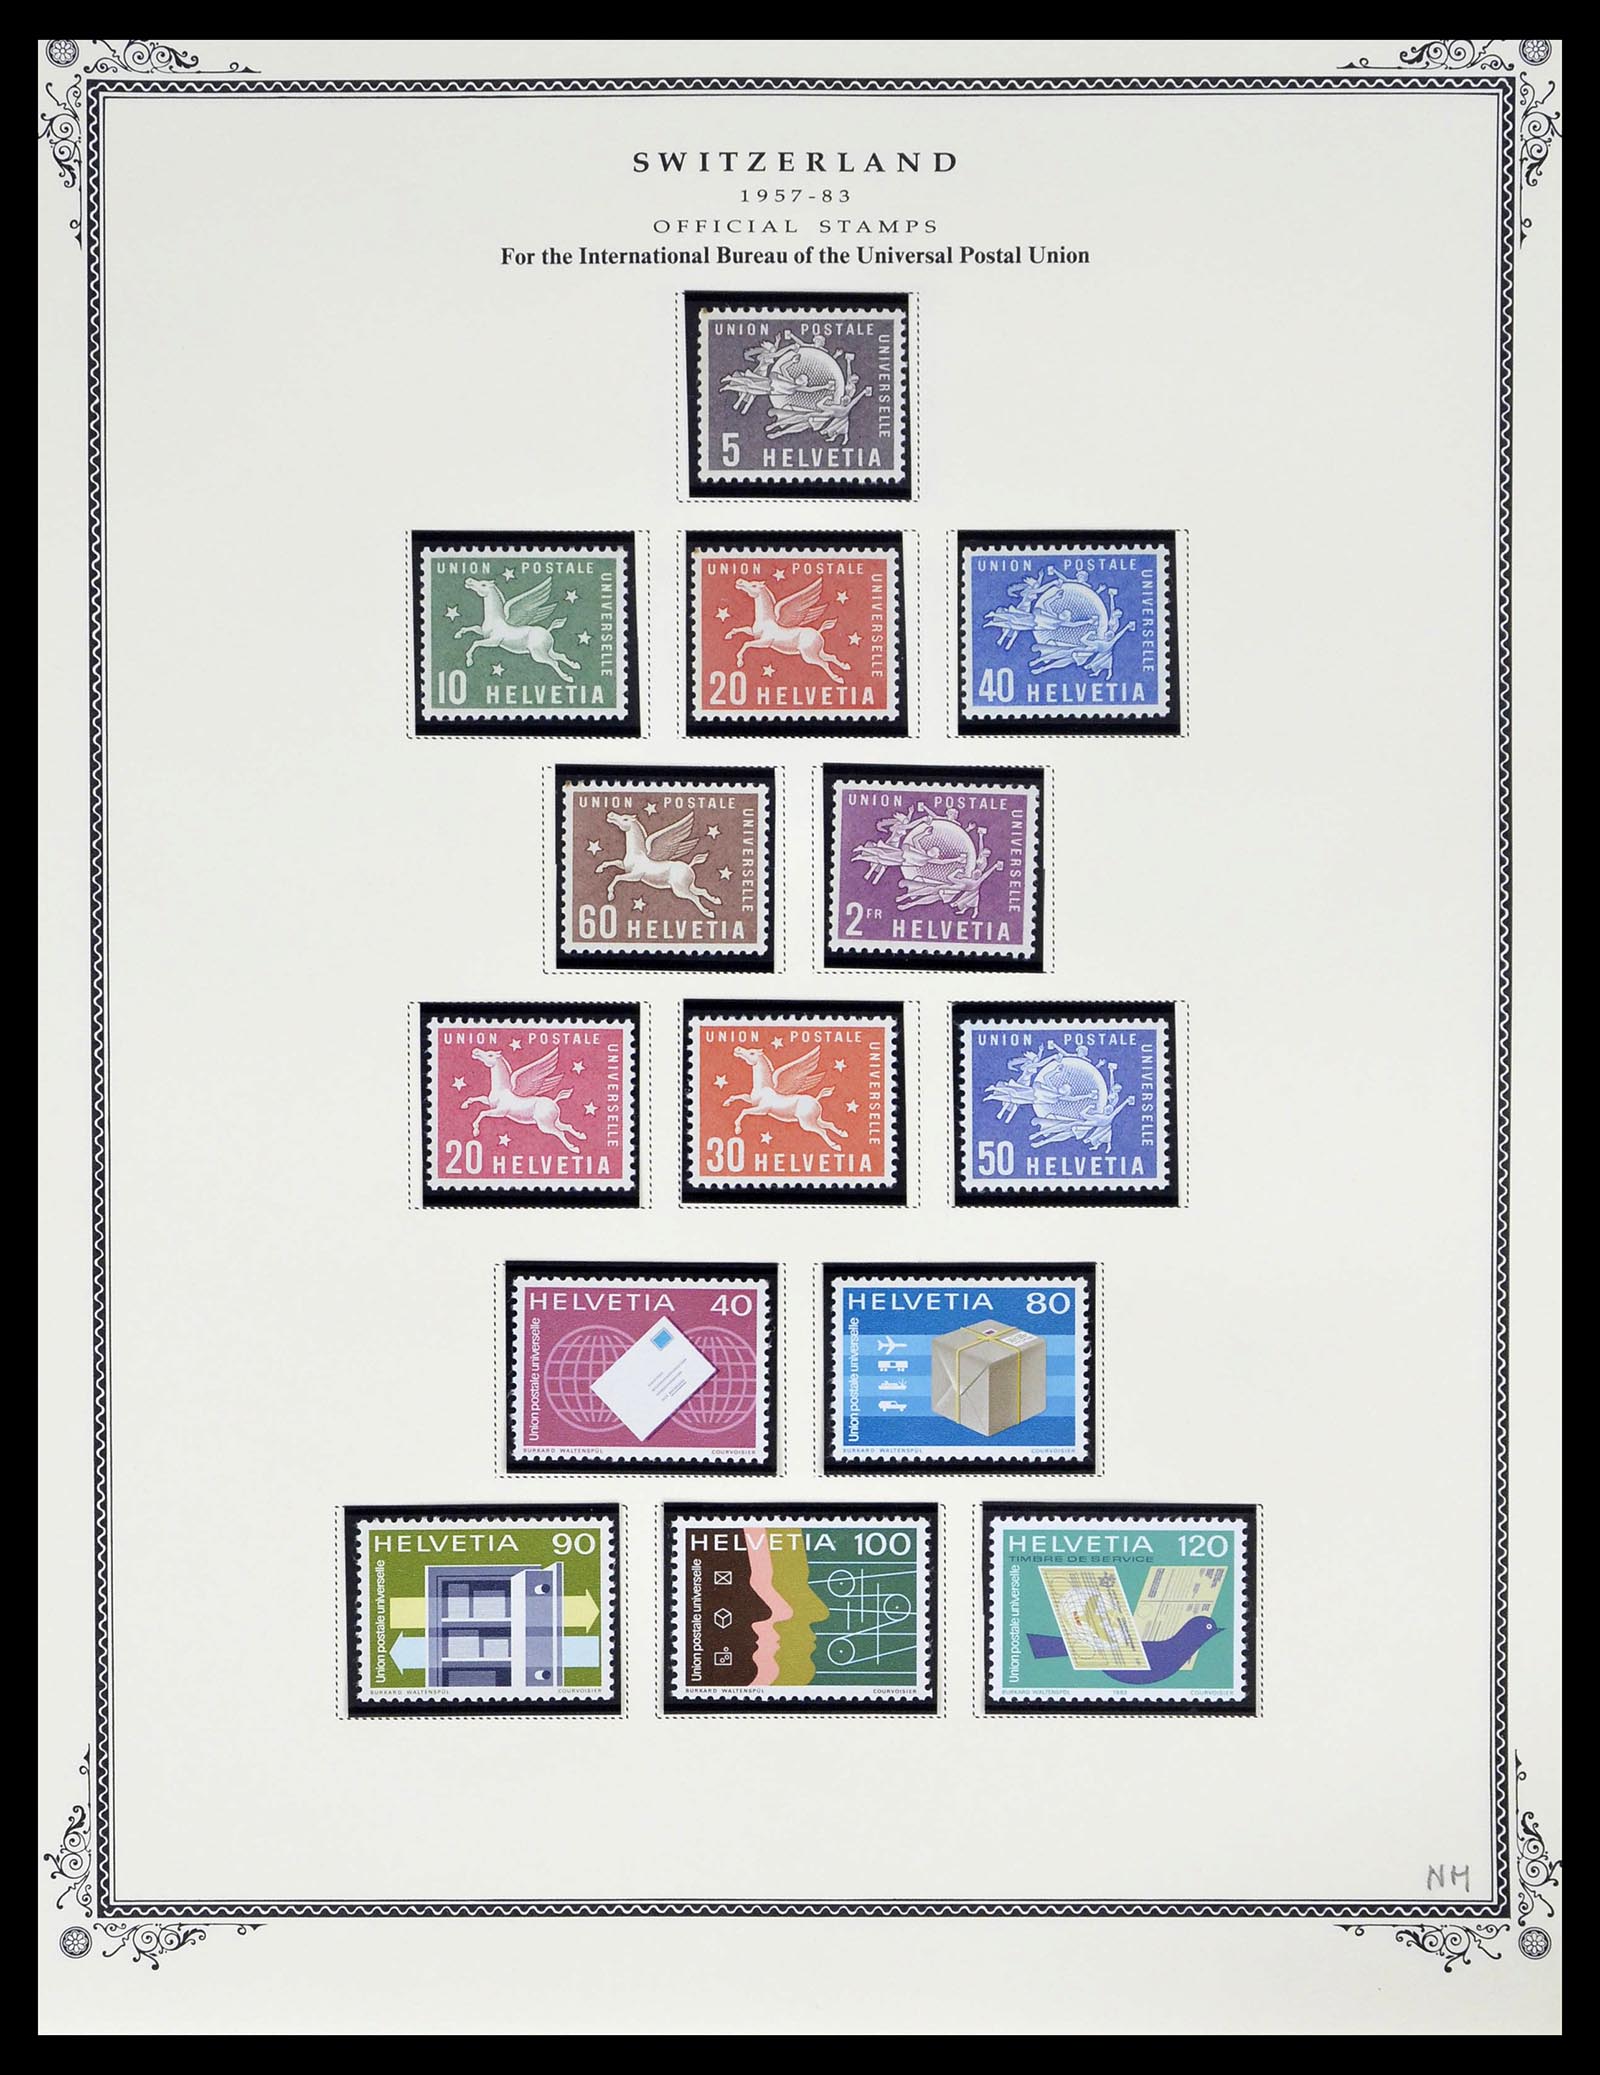 39178 0261 - Stamp collection 39178 Switzerland 1850-1989.